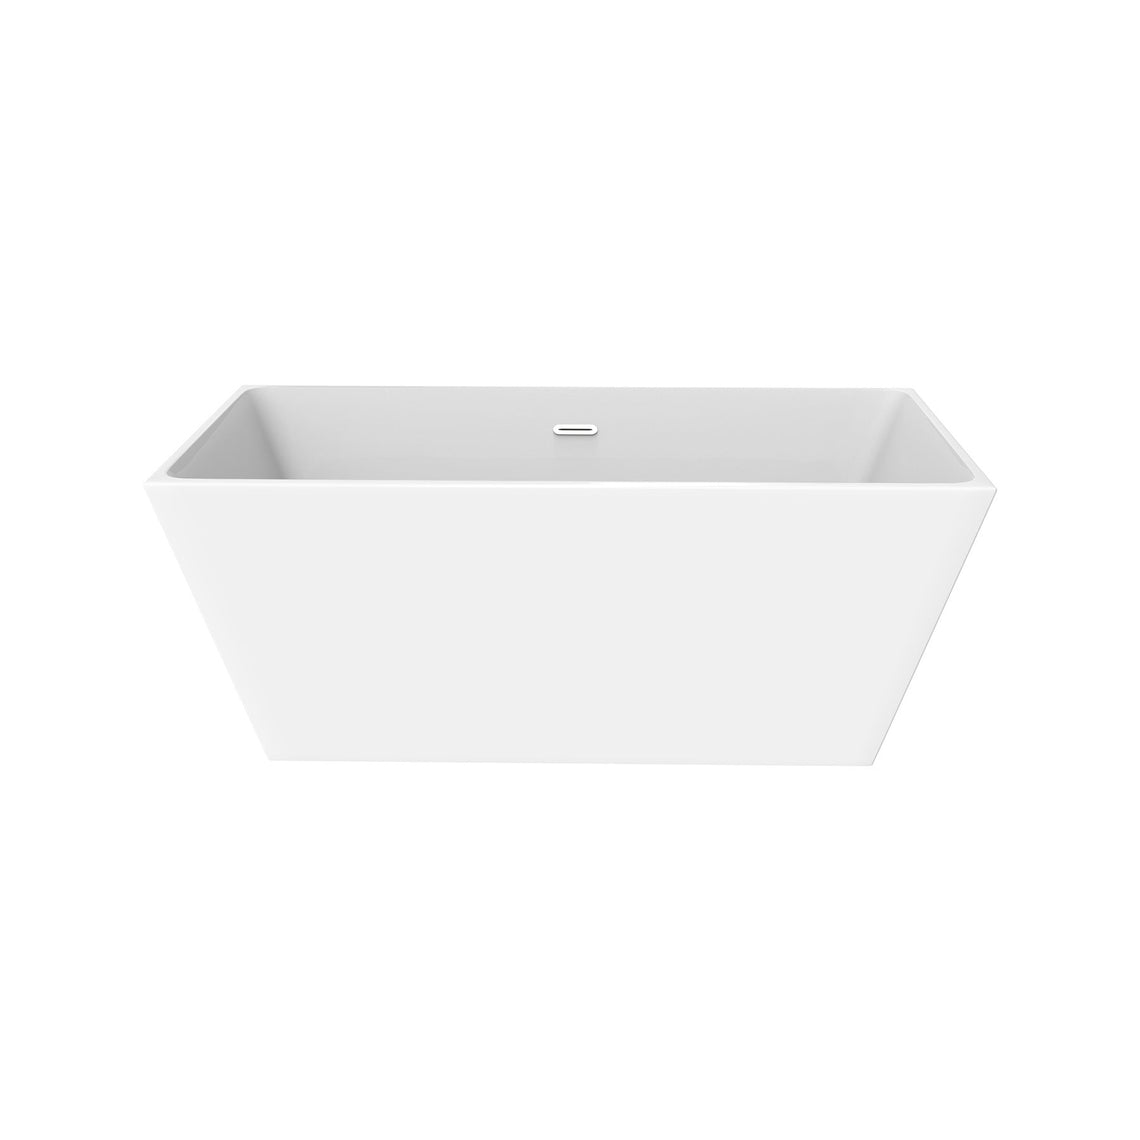 Harmony 59 In. Rectangular Acrylic Freestanding Soaking Bathtub in Glossy White Chrome-Plated Center Drain & Overflow Cover